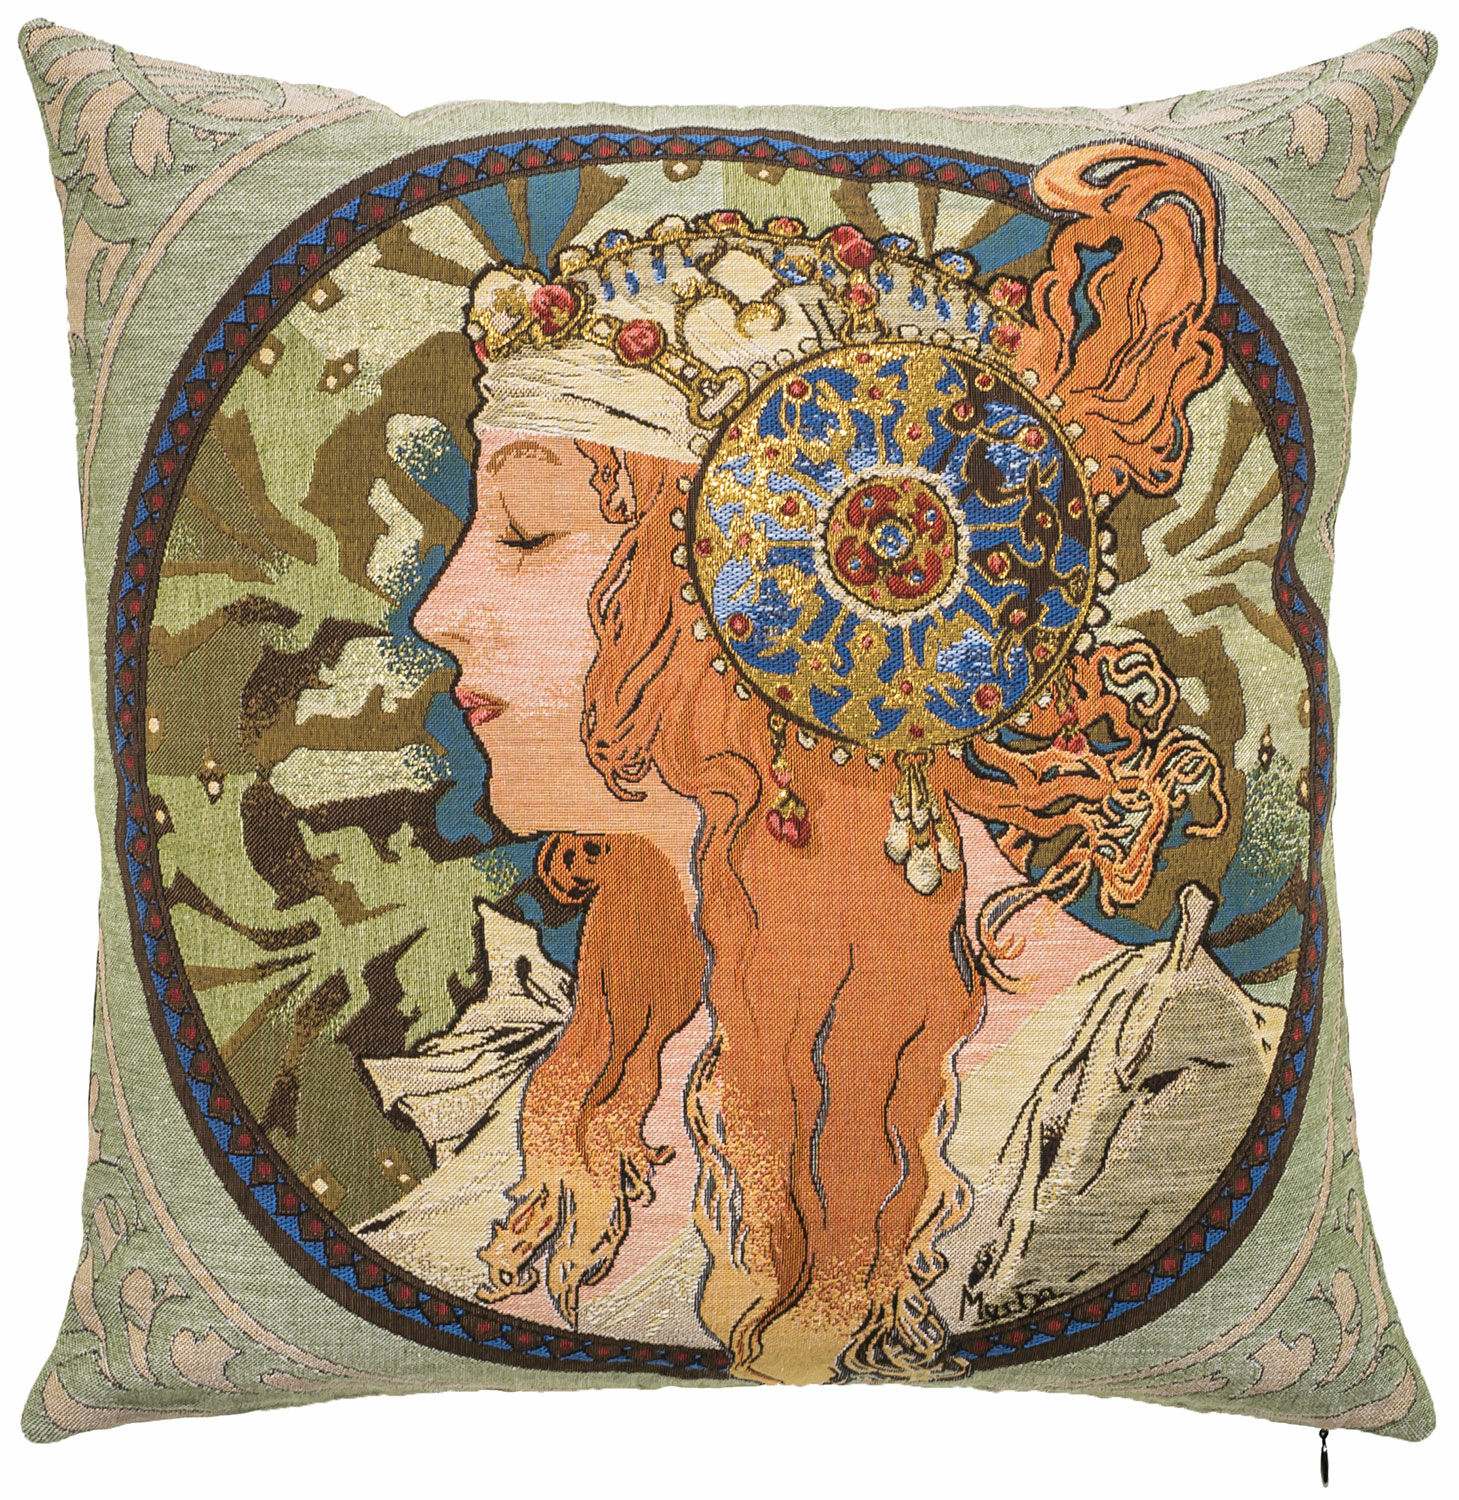 Cushion cover "Byzantine II" by Alphonse Mucha